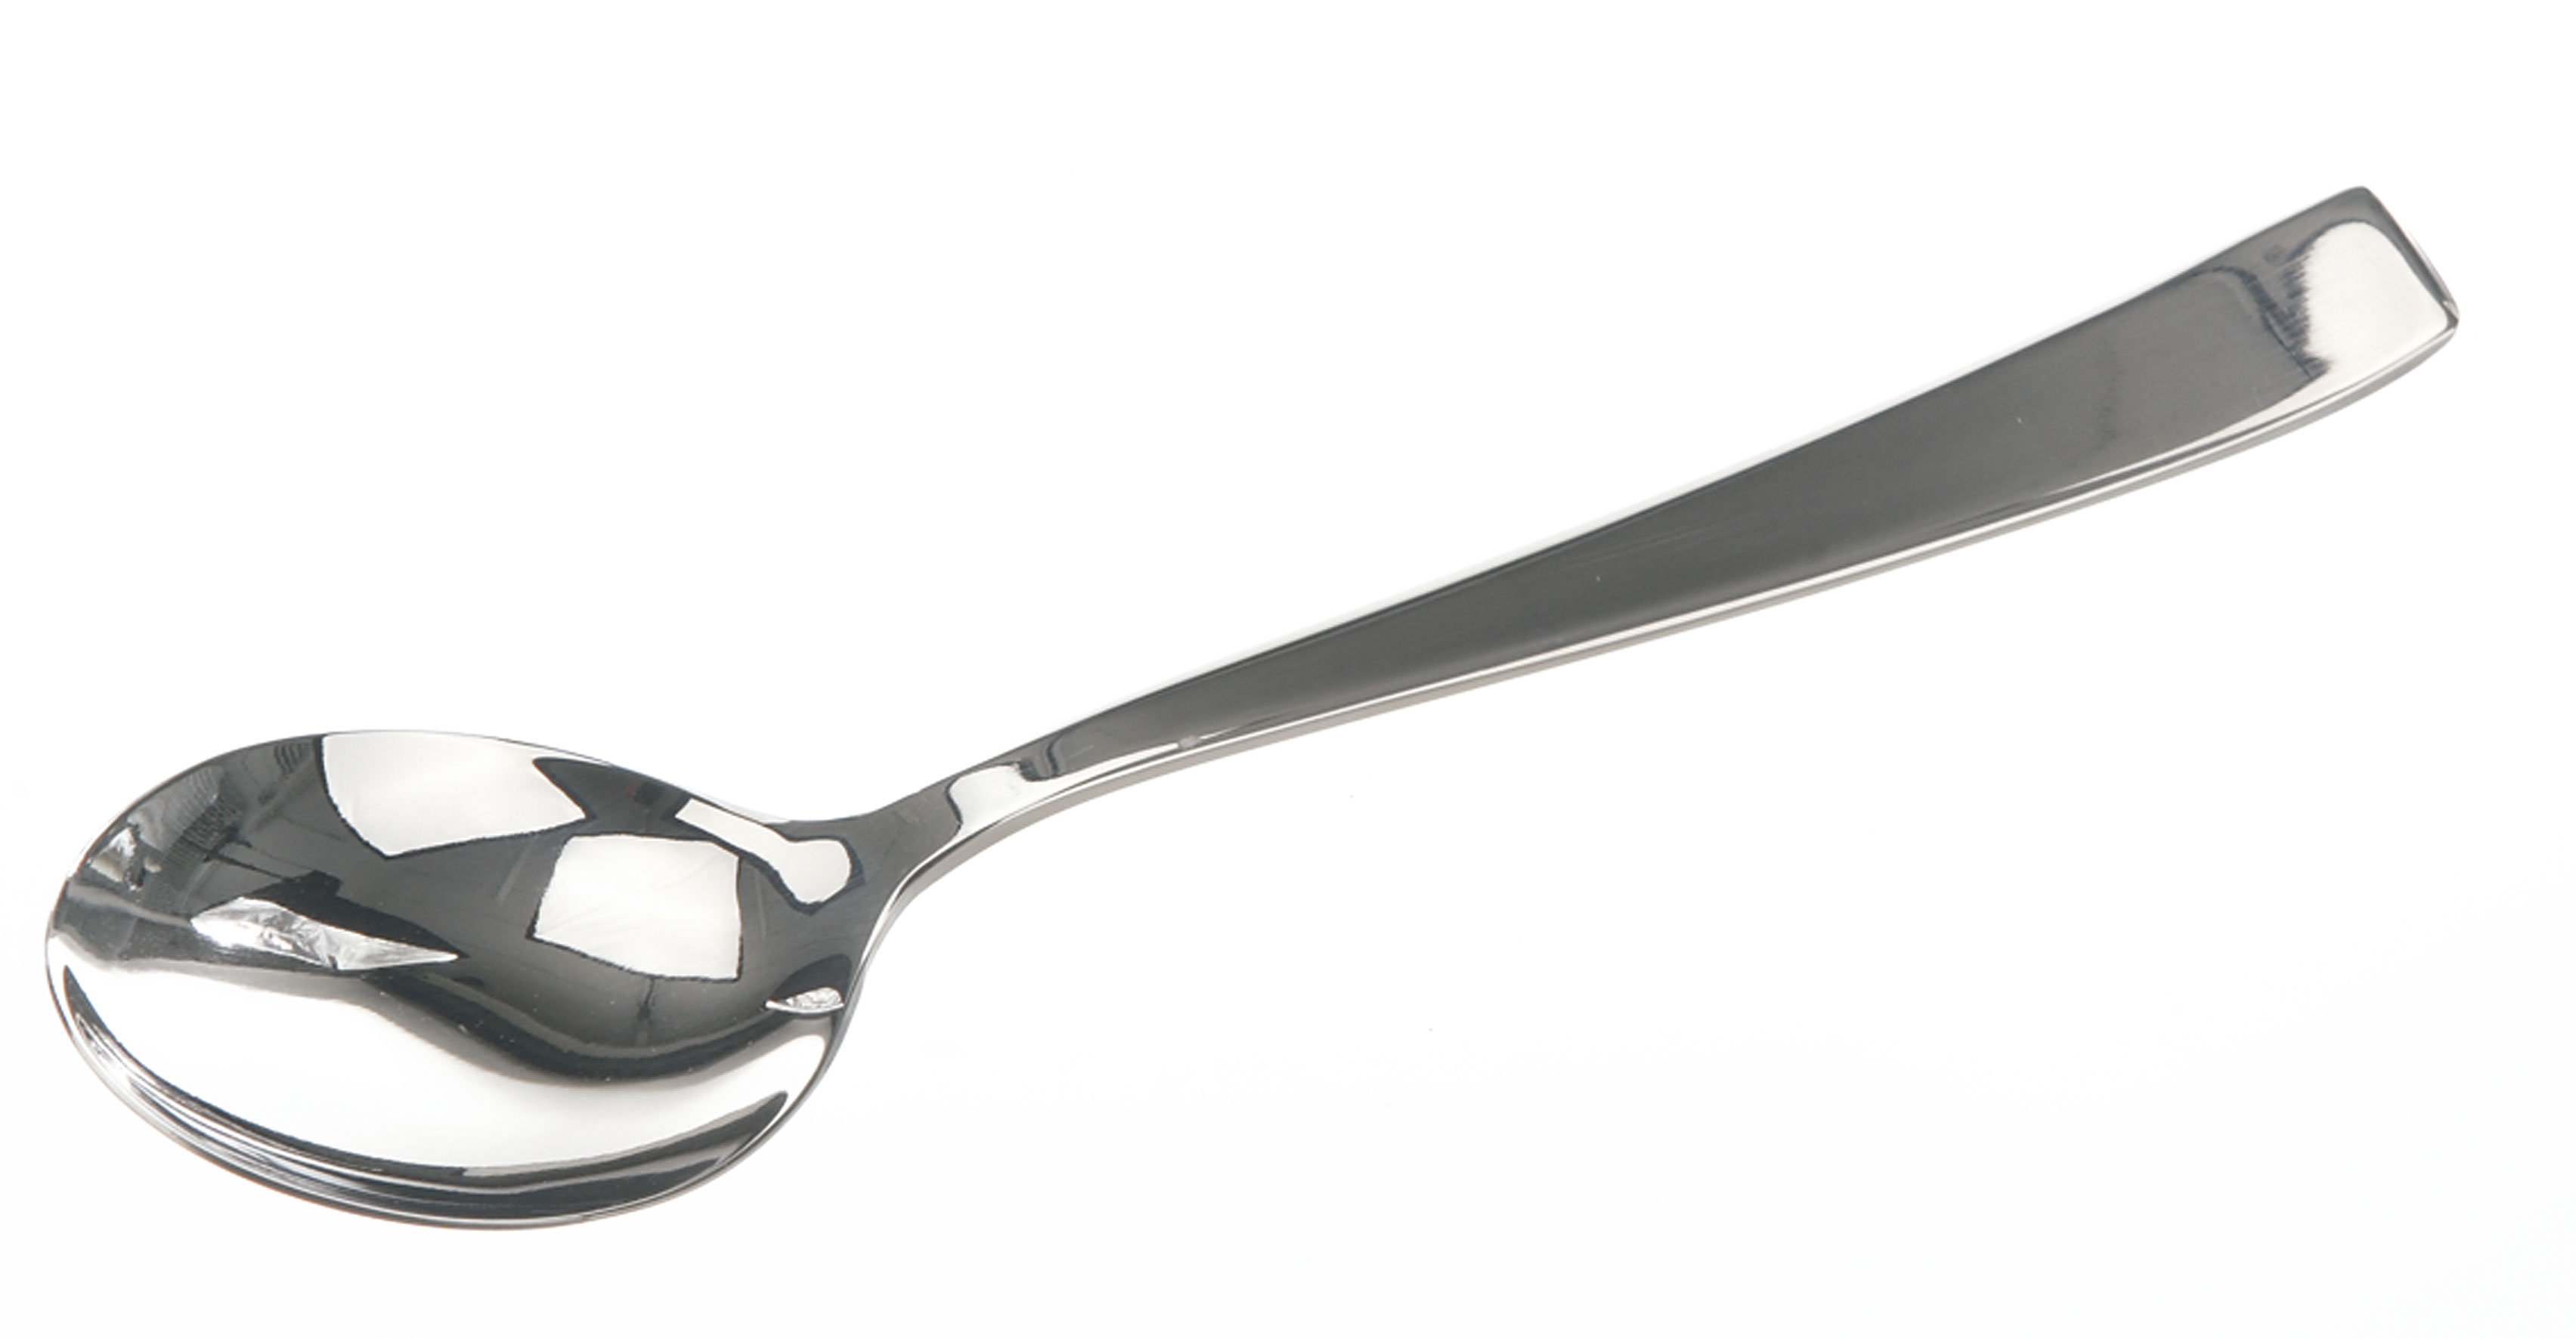 Laboratory spoon. Length (mm): 280. Spatula (mm): 70x85